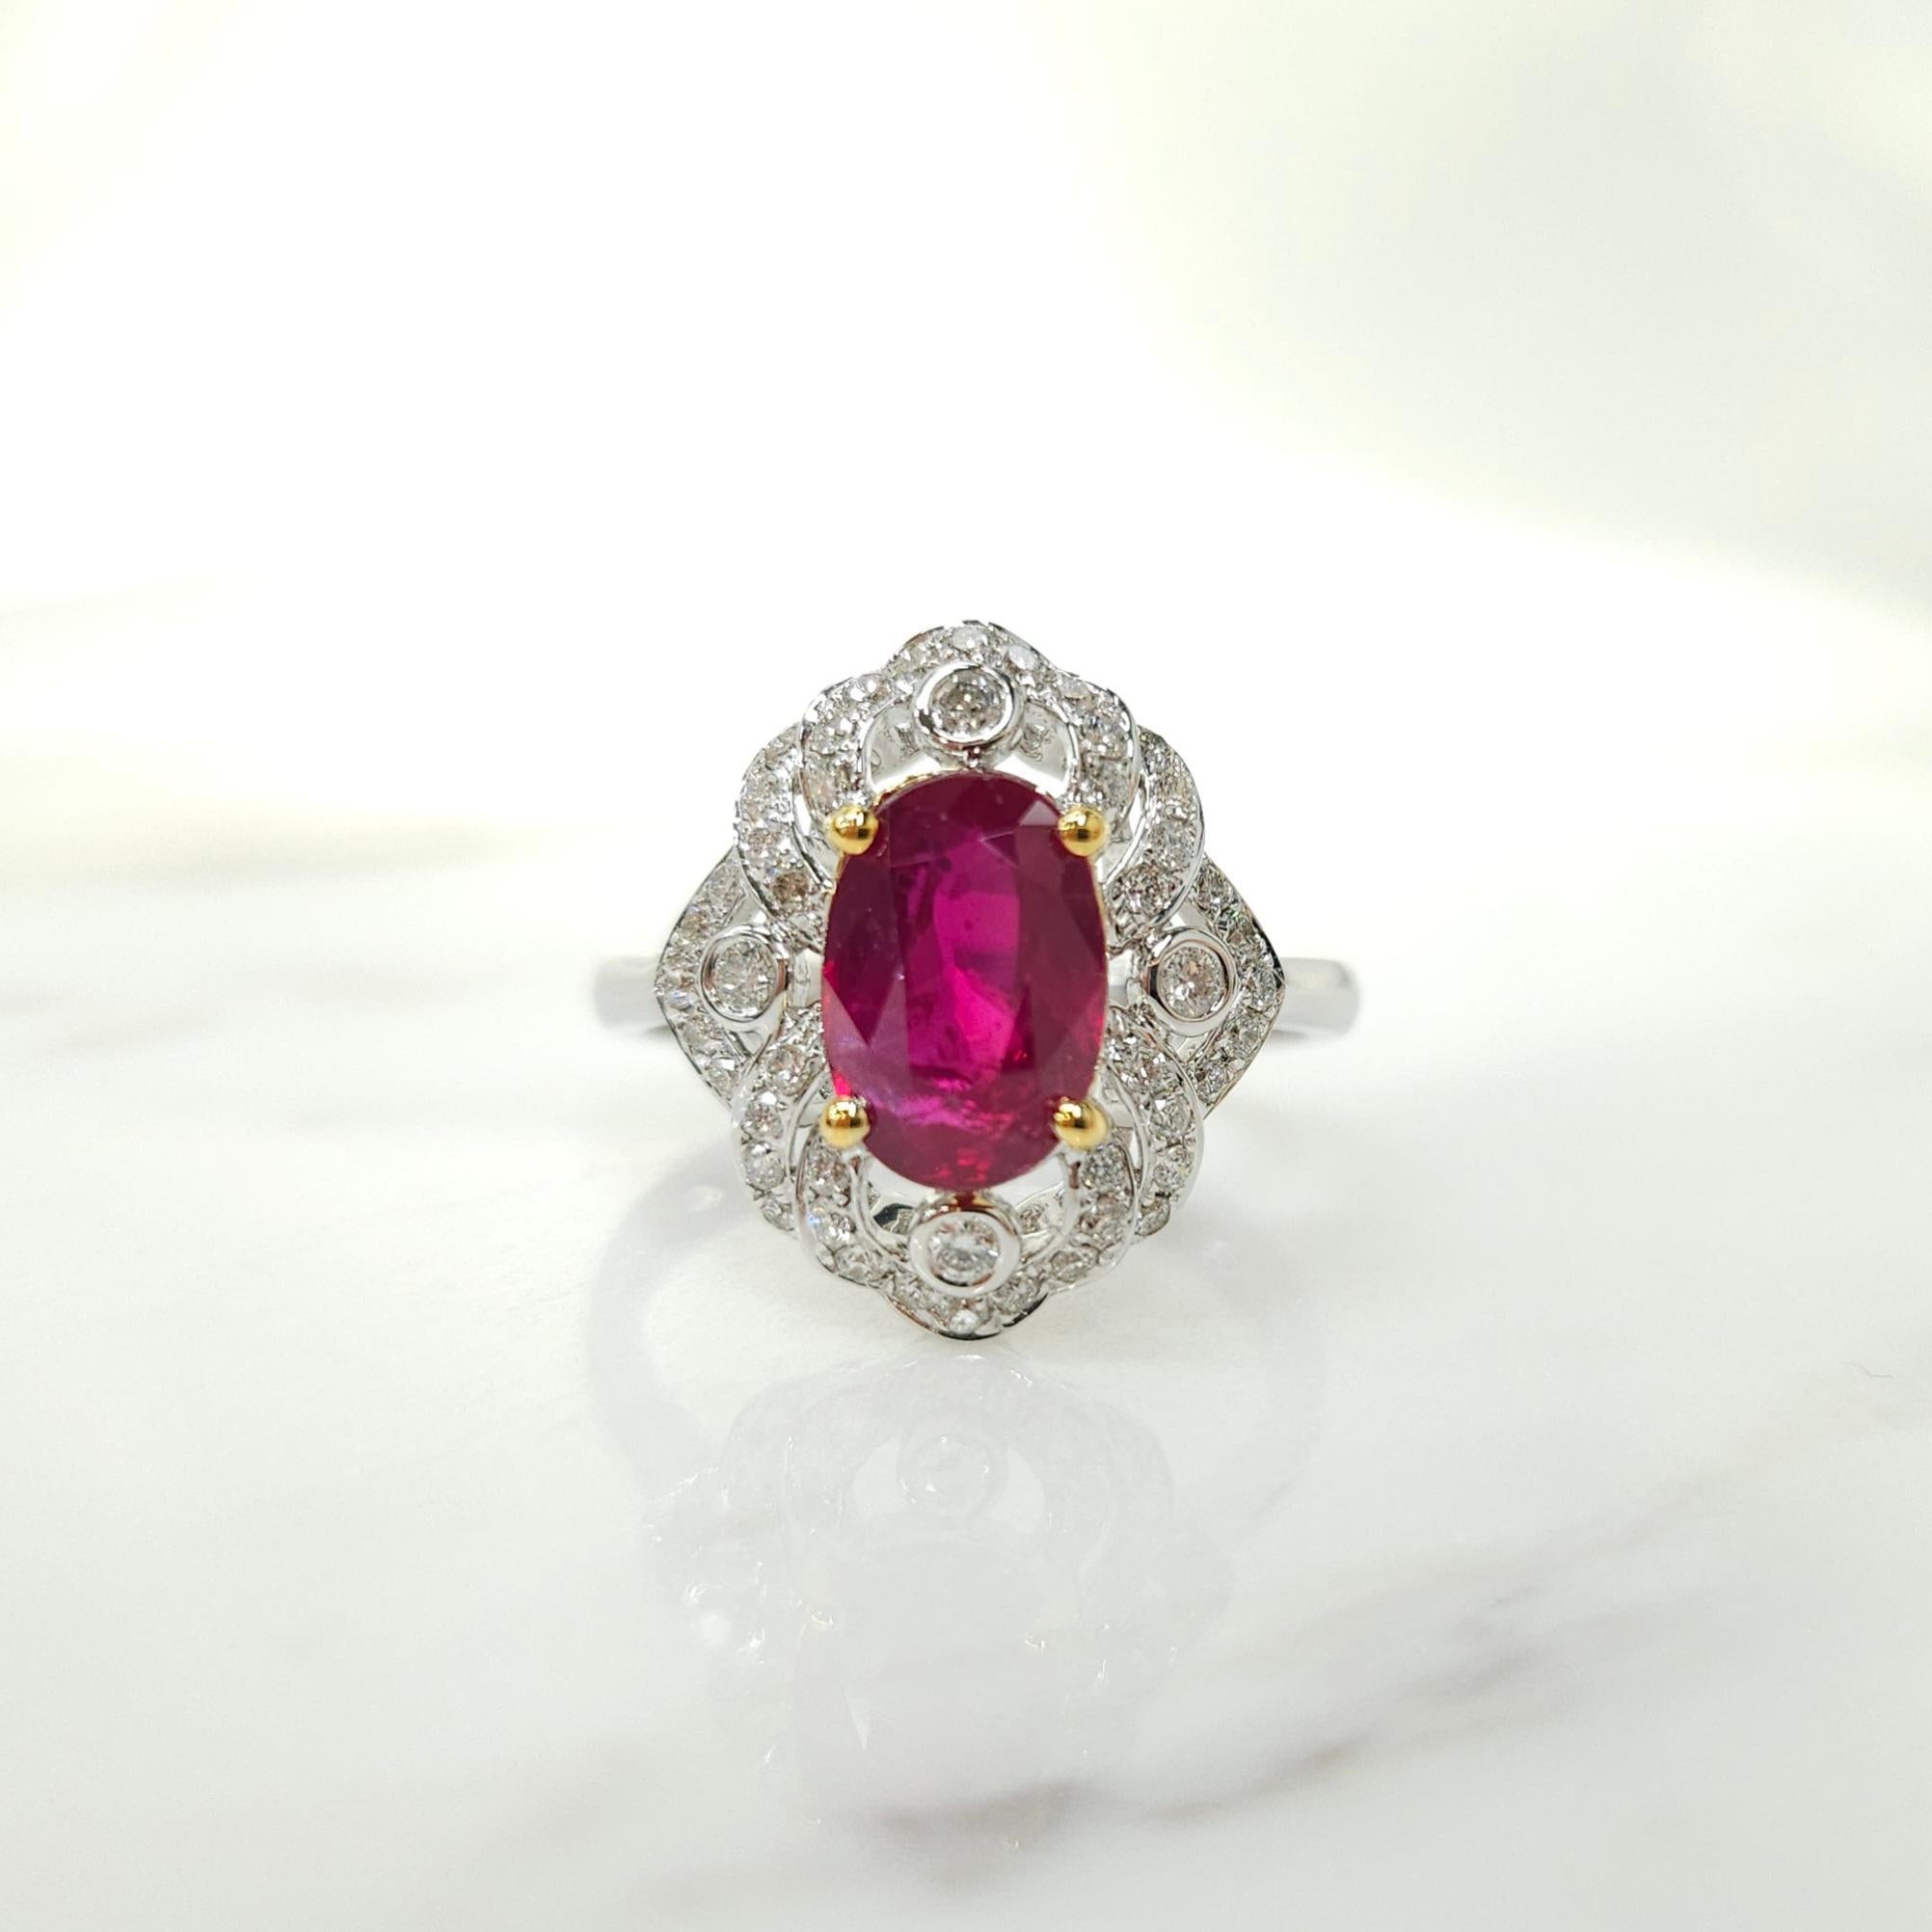 IGI Certified 2.07 Carat Unheated Burma Ruby & Diamond Ring in 18K White Gold For Sale 3